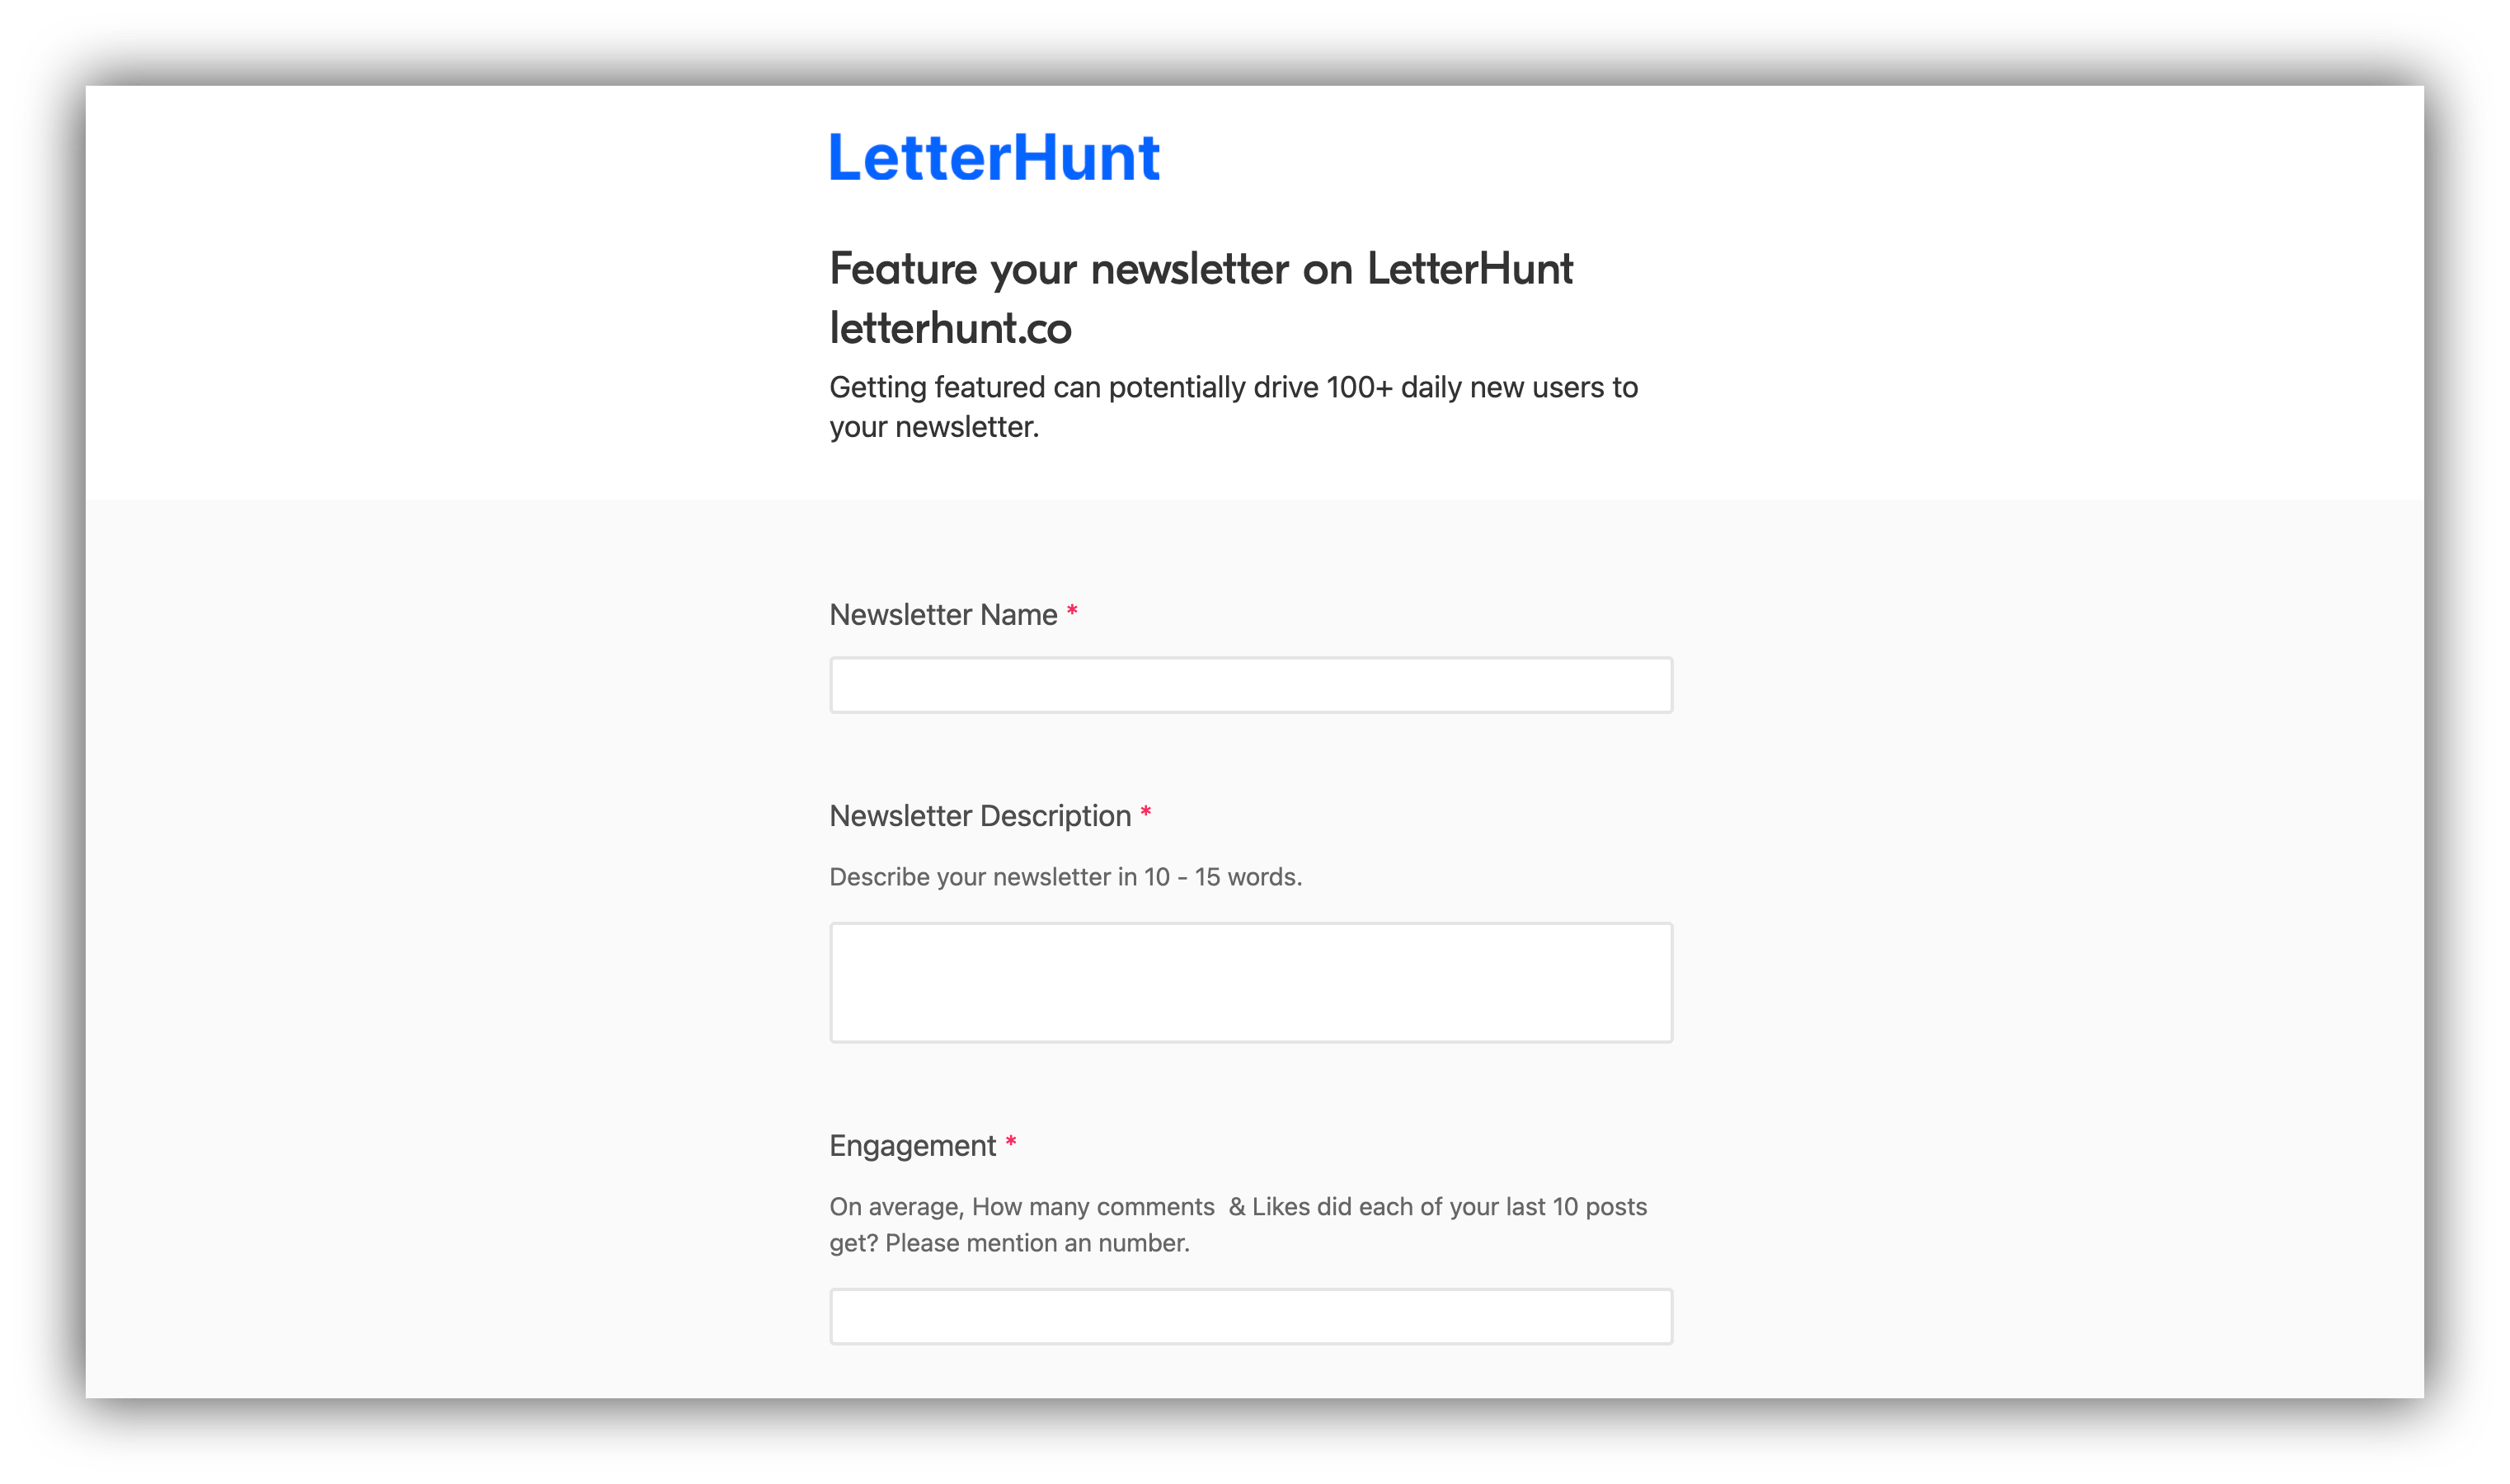 LetterHunt newsletter submission form